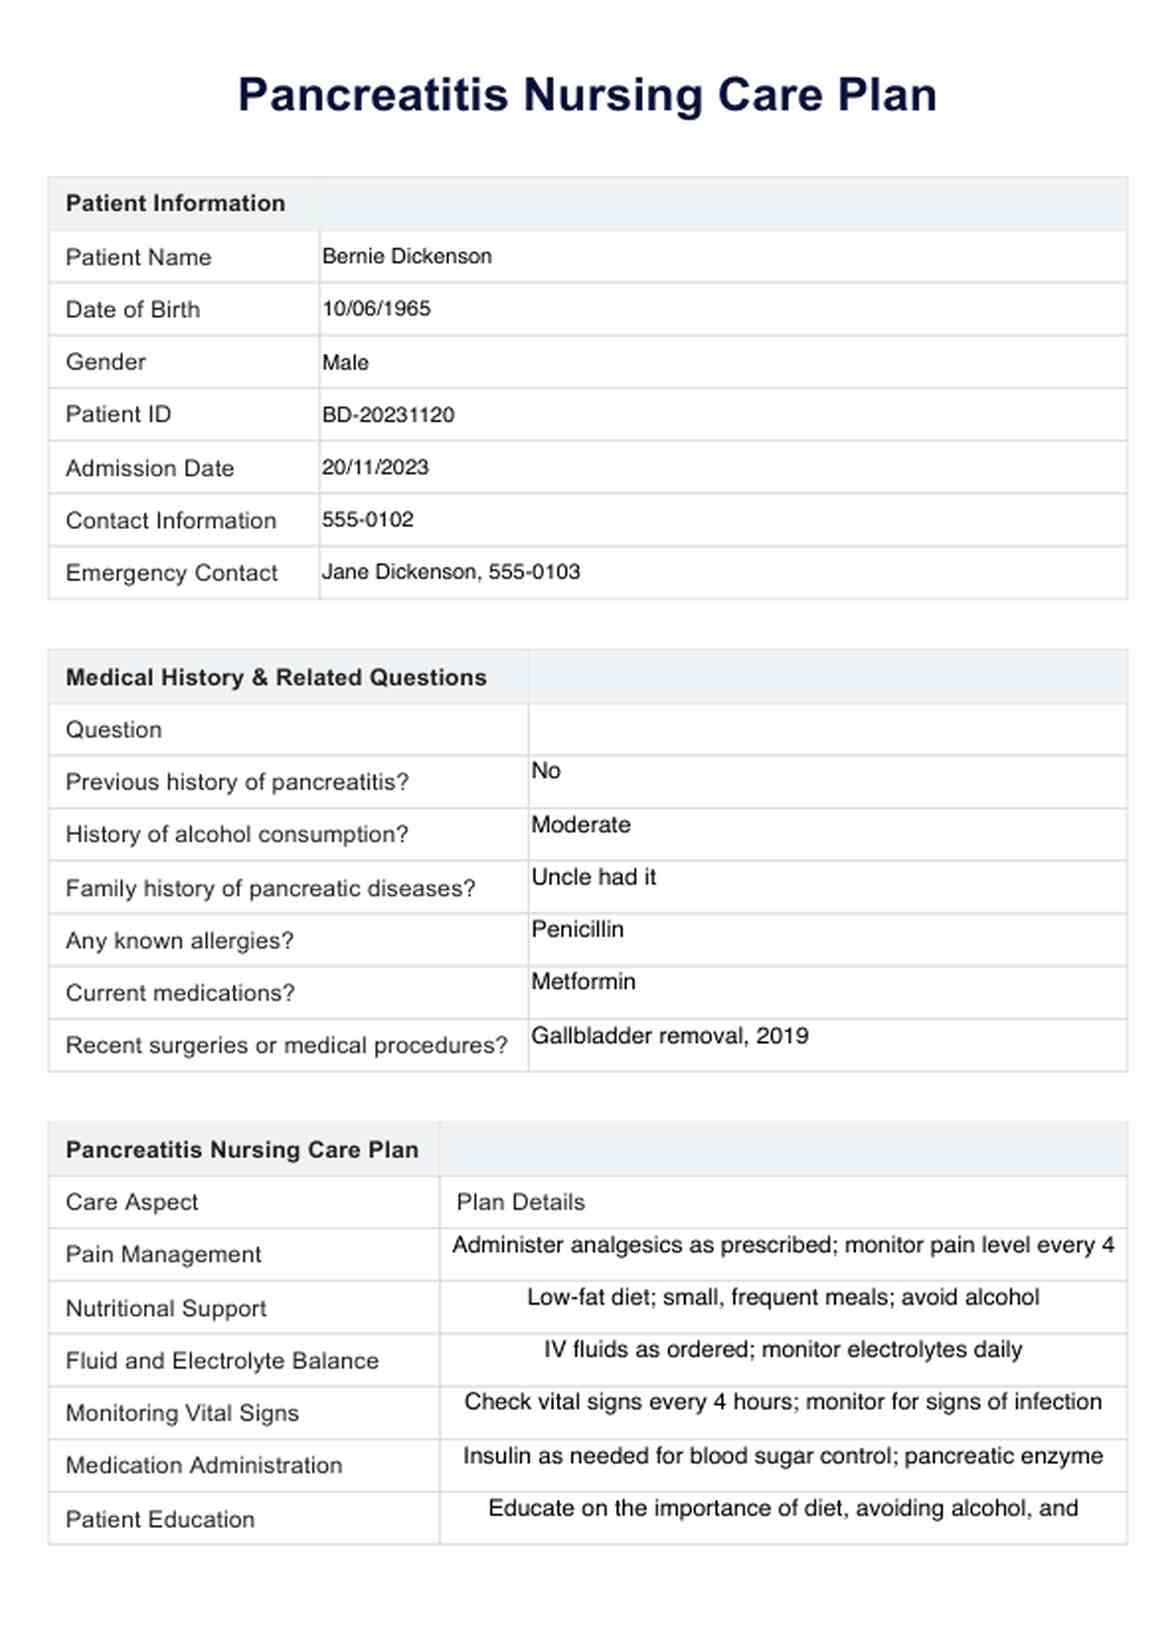 Pancreatitis Nursing Care Plan PDF Example